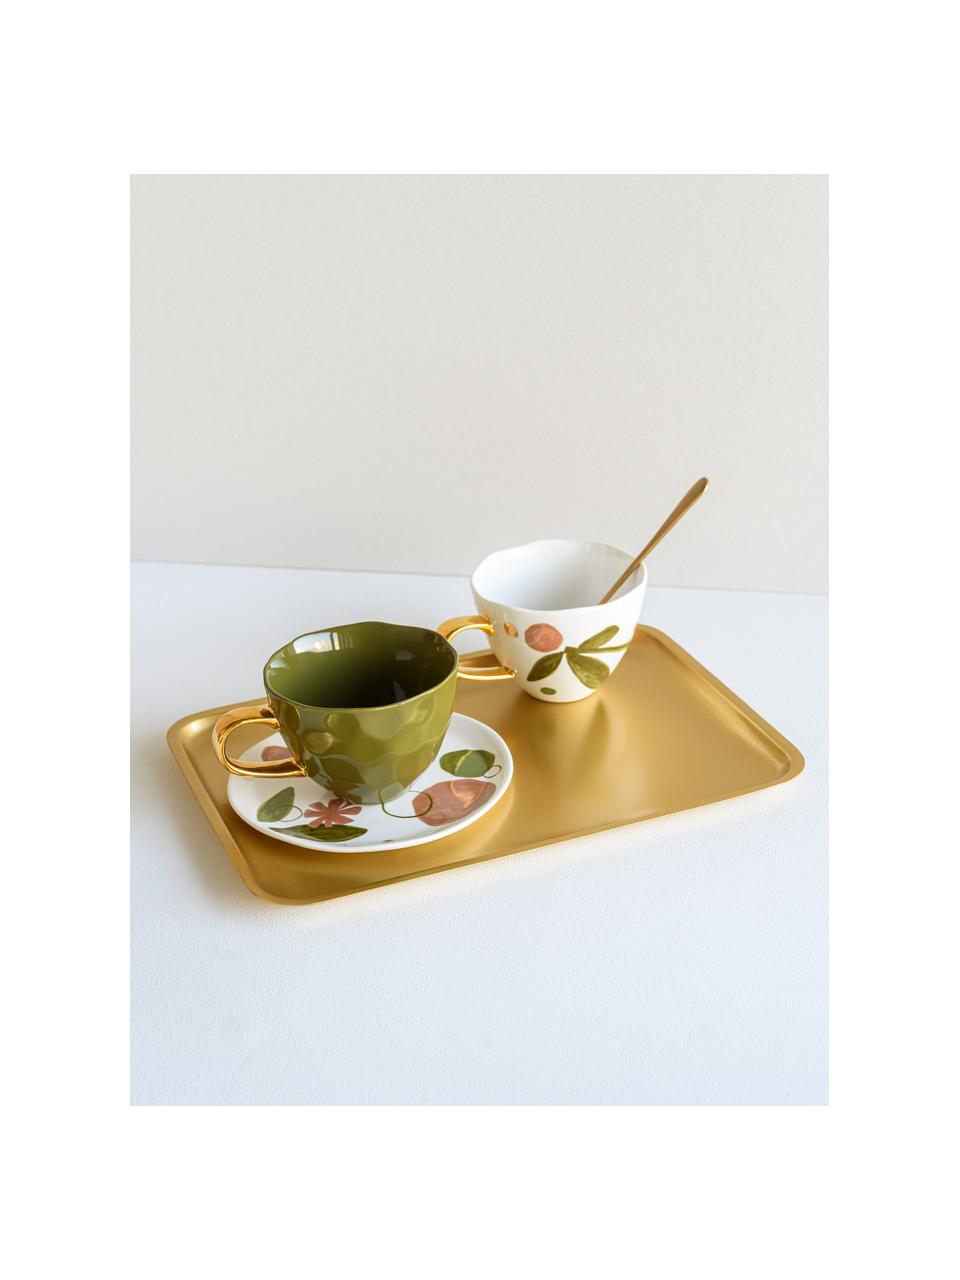 Ontbijtbord Expressive, New Bone China, Wit, roze, groen, goudkleurig, Ø 17 cm